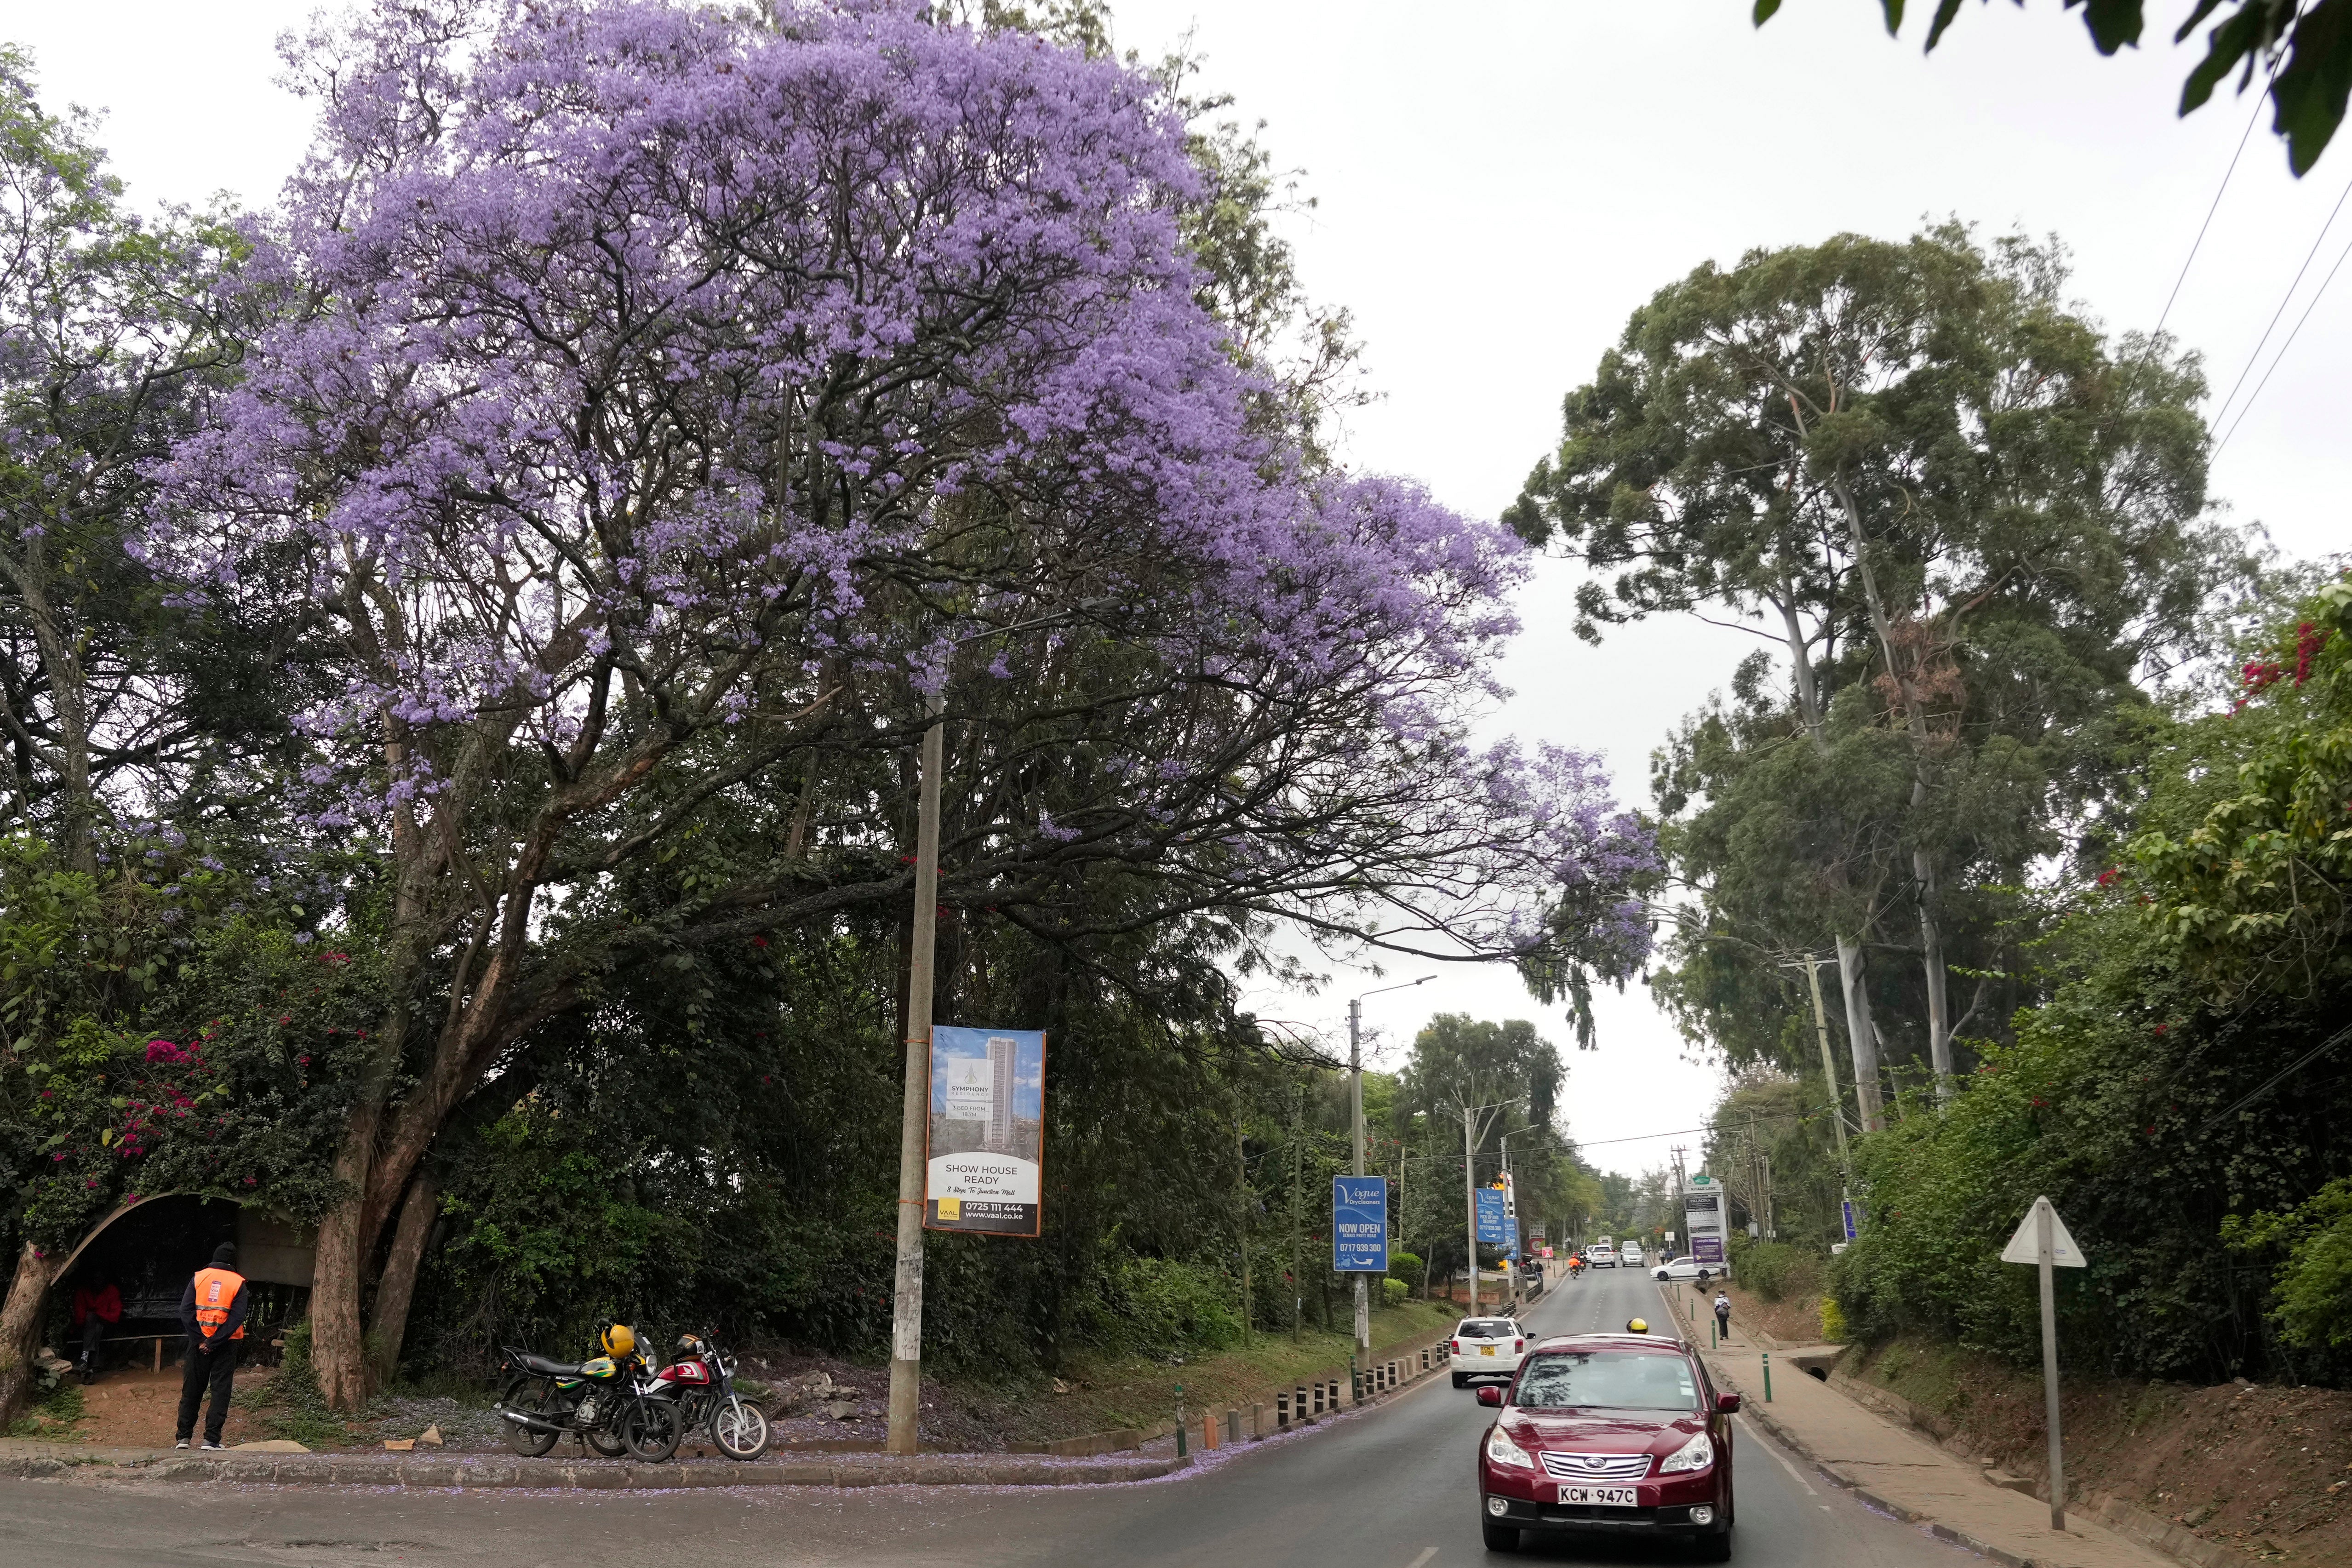 A Jacaranda tree in bloom in Nairobi, Kenya